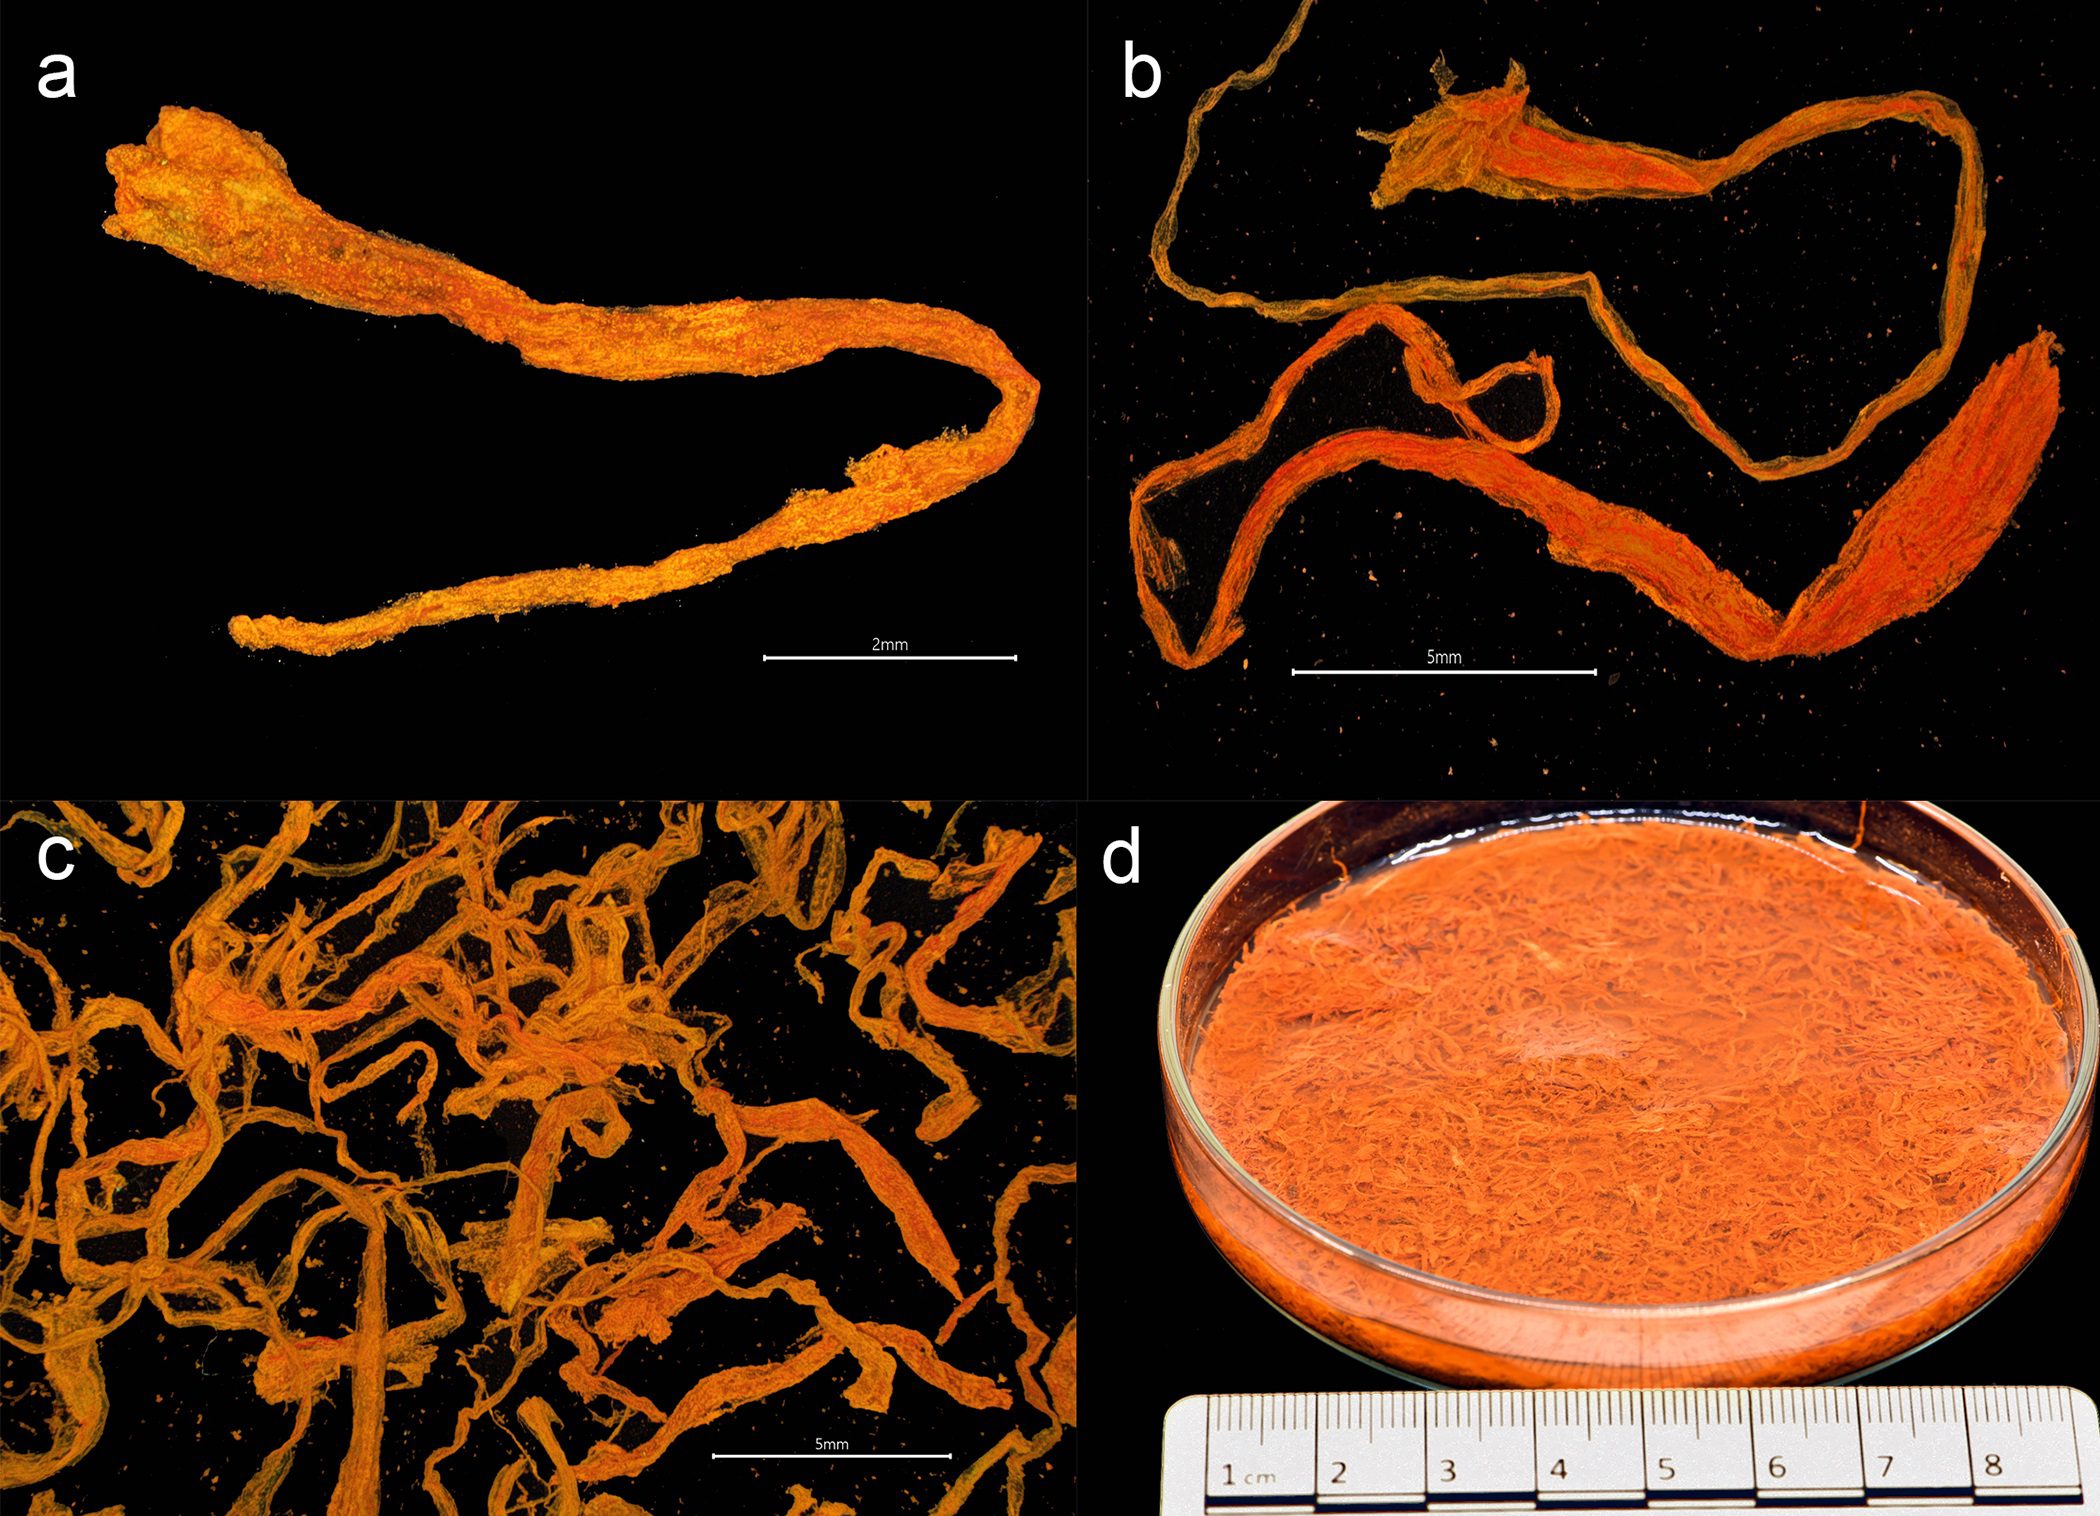 Saffron from the Gribshunden shipwreck site. Plant parts of saffron: a-c) stigmas, d) petri dish showing a portion of the recovered saffron stigmas. Image credit: Larsson, Foley, PLOS ONE, 2023